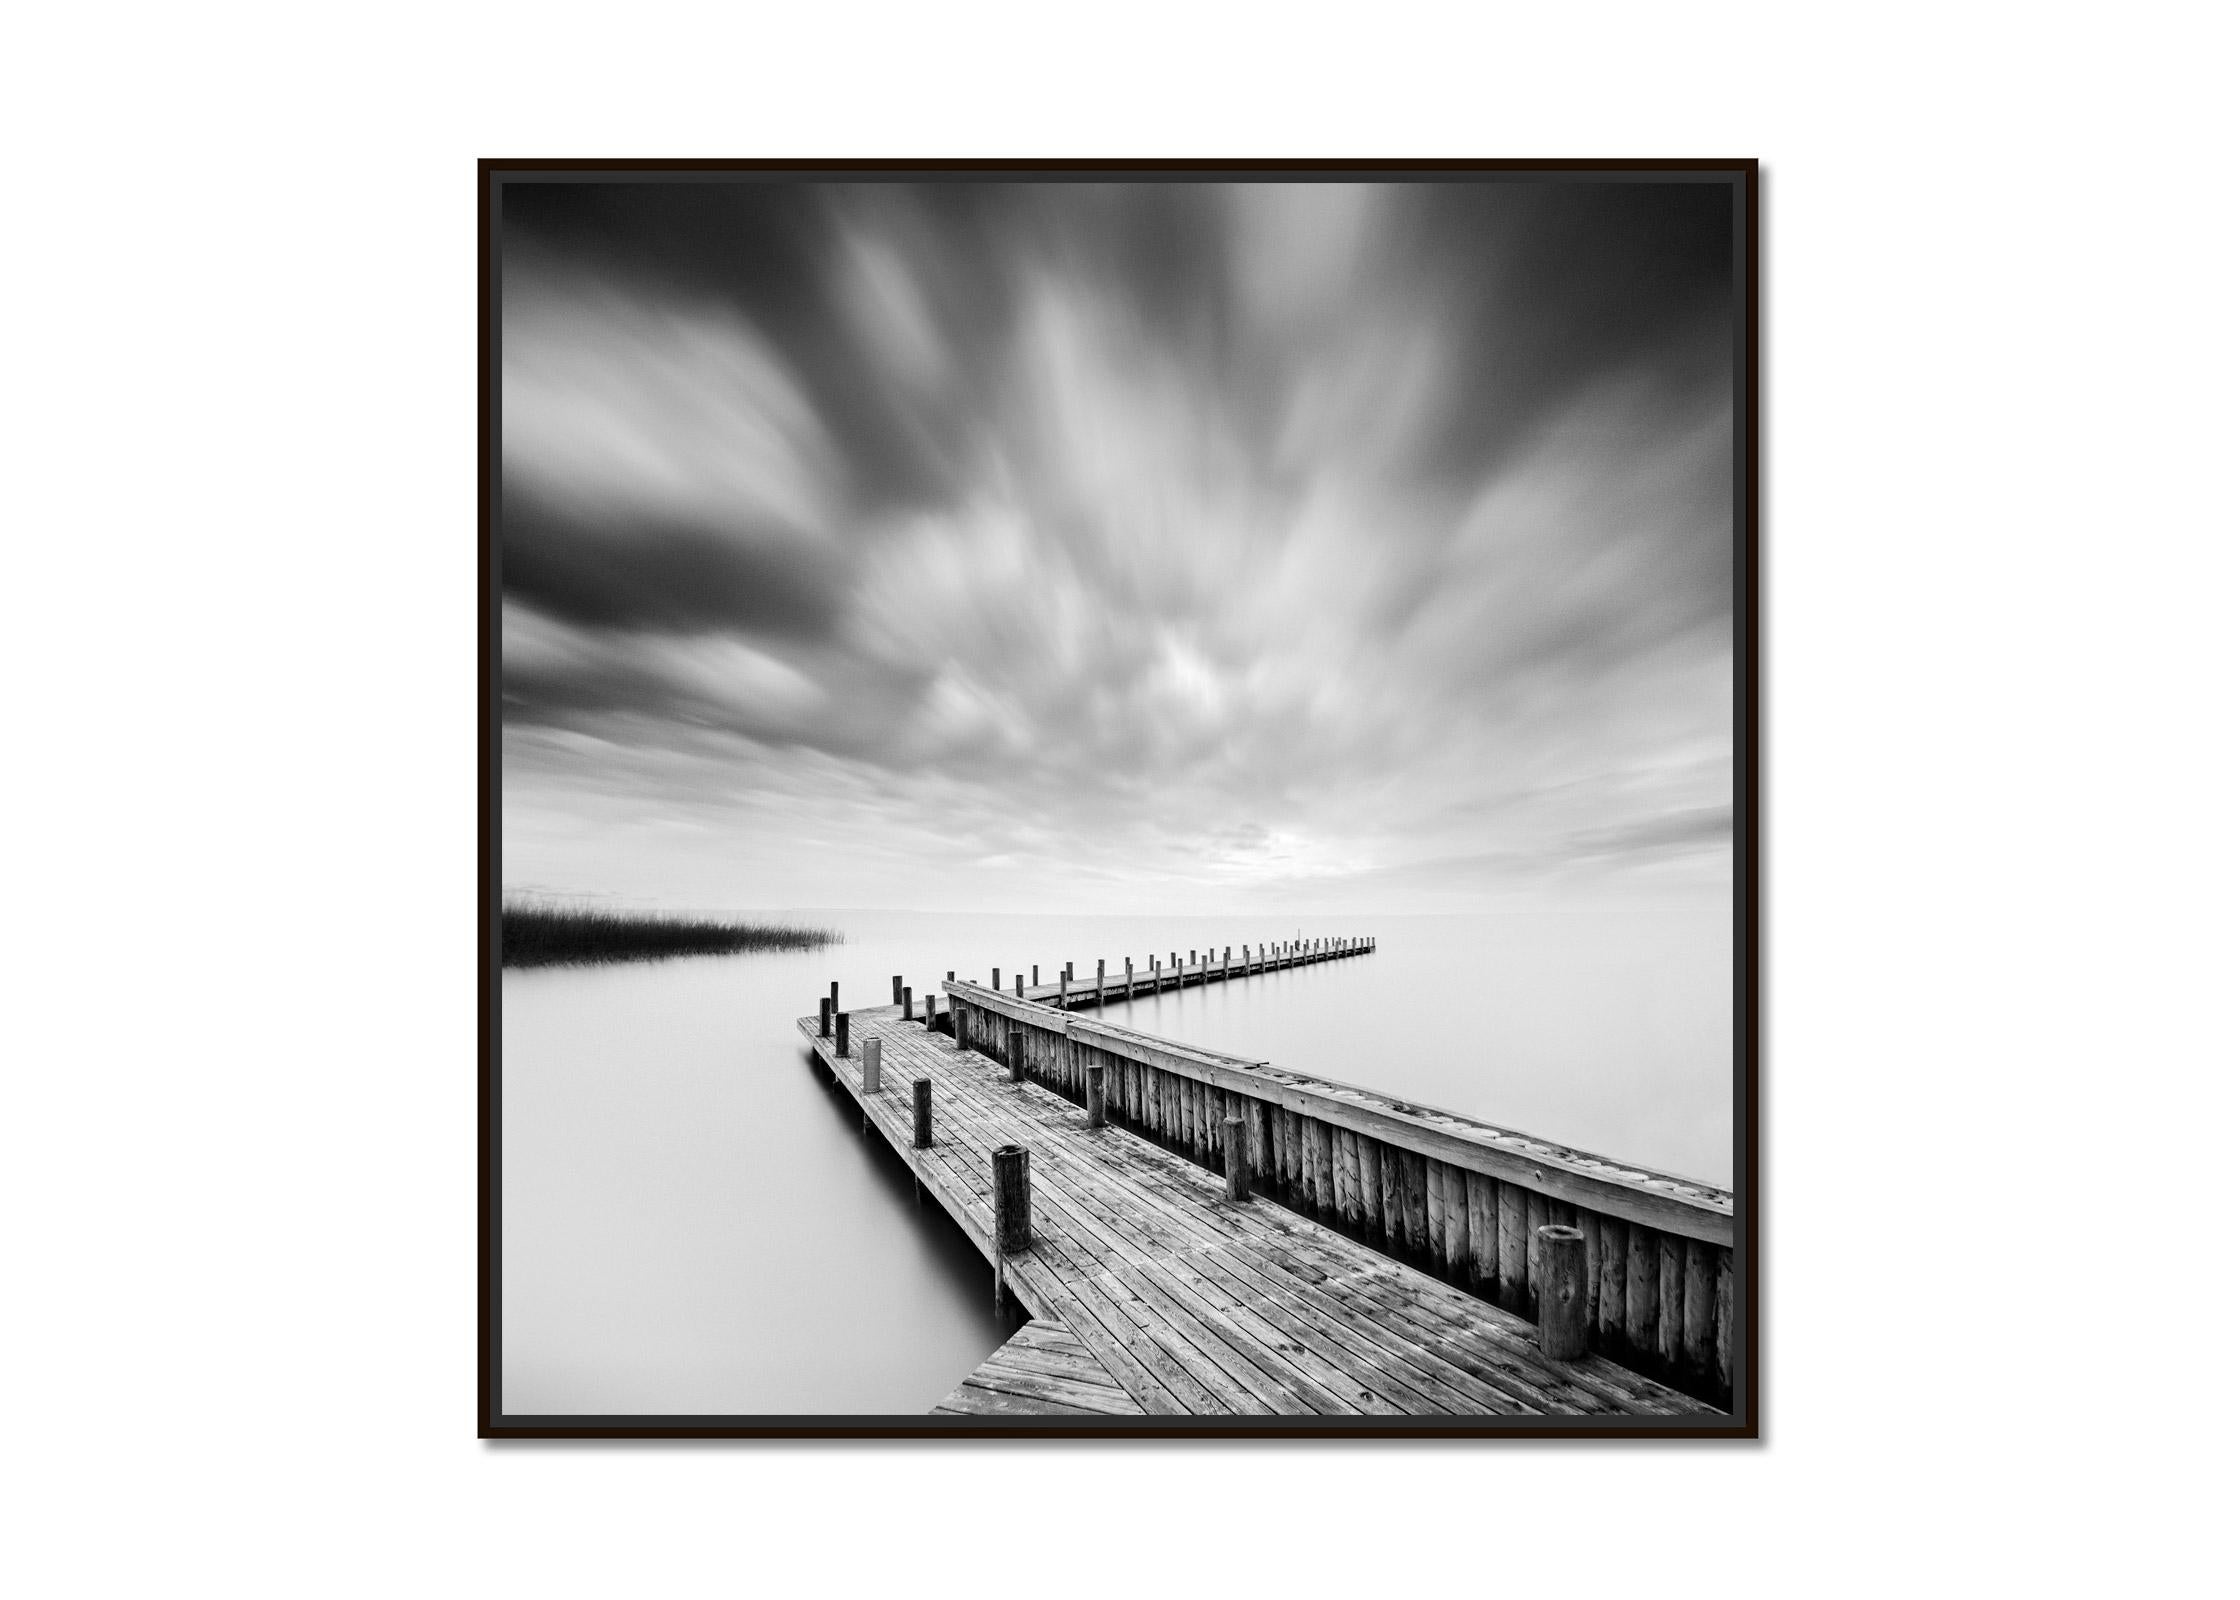 Wood Pier, lake, storm, long exposure black white fine art photography landscape - Photograph by Gerald Berghammer